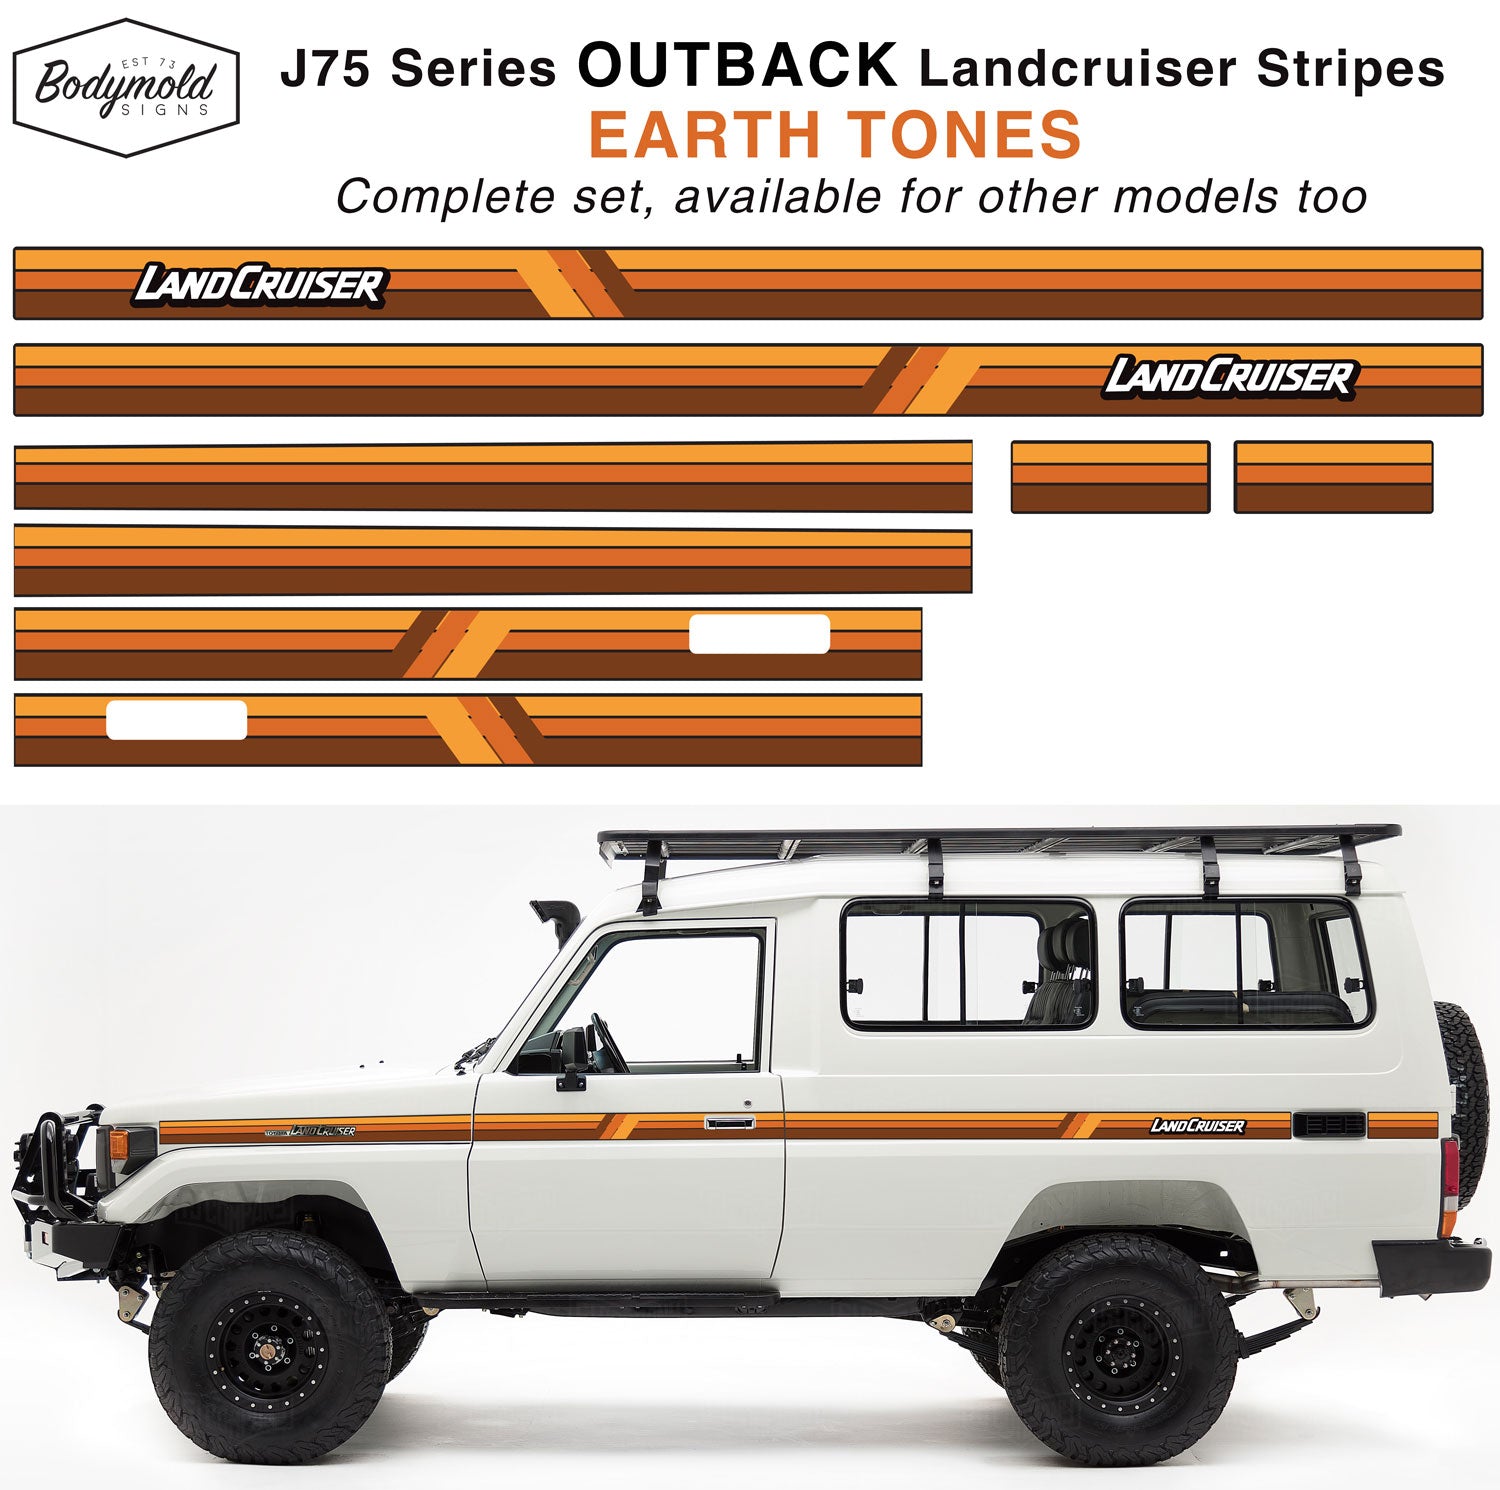 Landcruiser J75 Outback Stripes